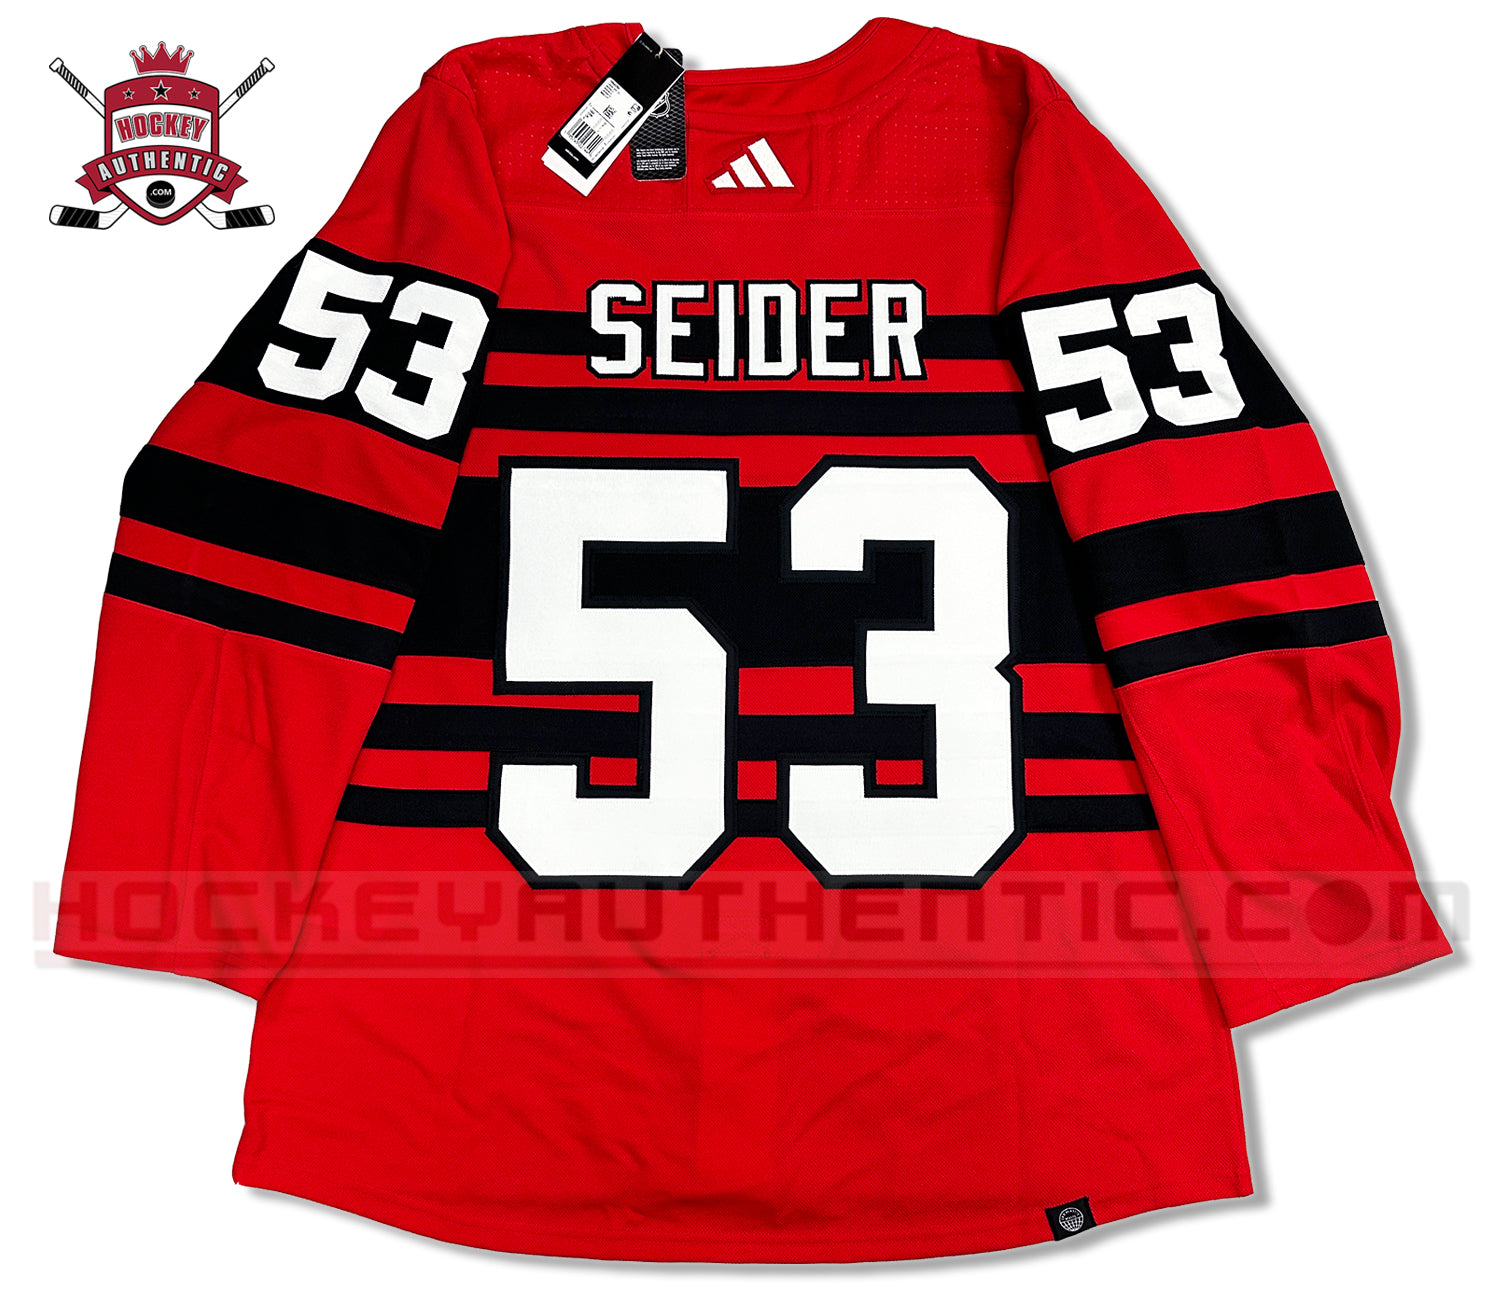 New! Detroit Red Wings Reverse Retro Jersey Seider #53